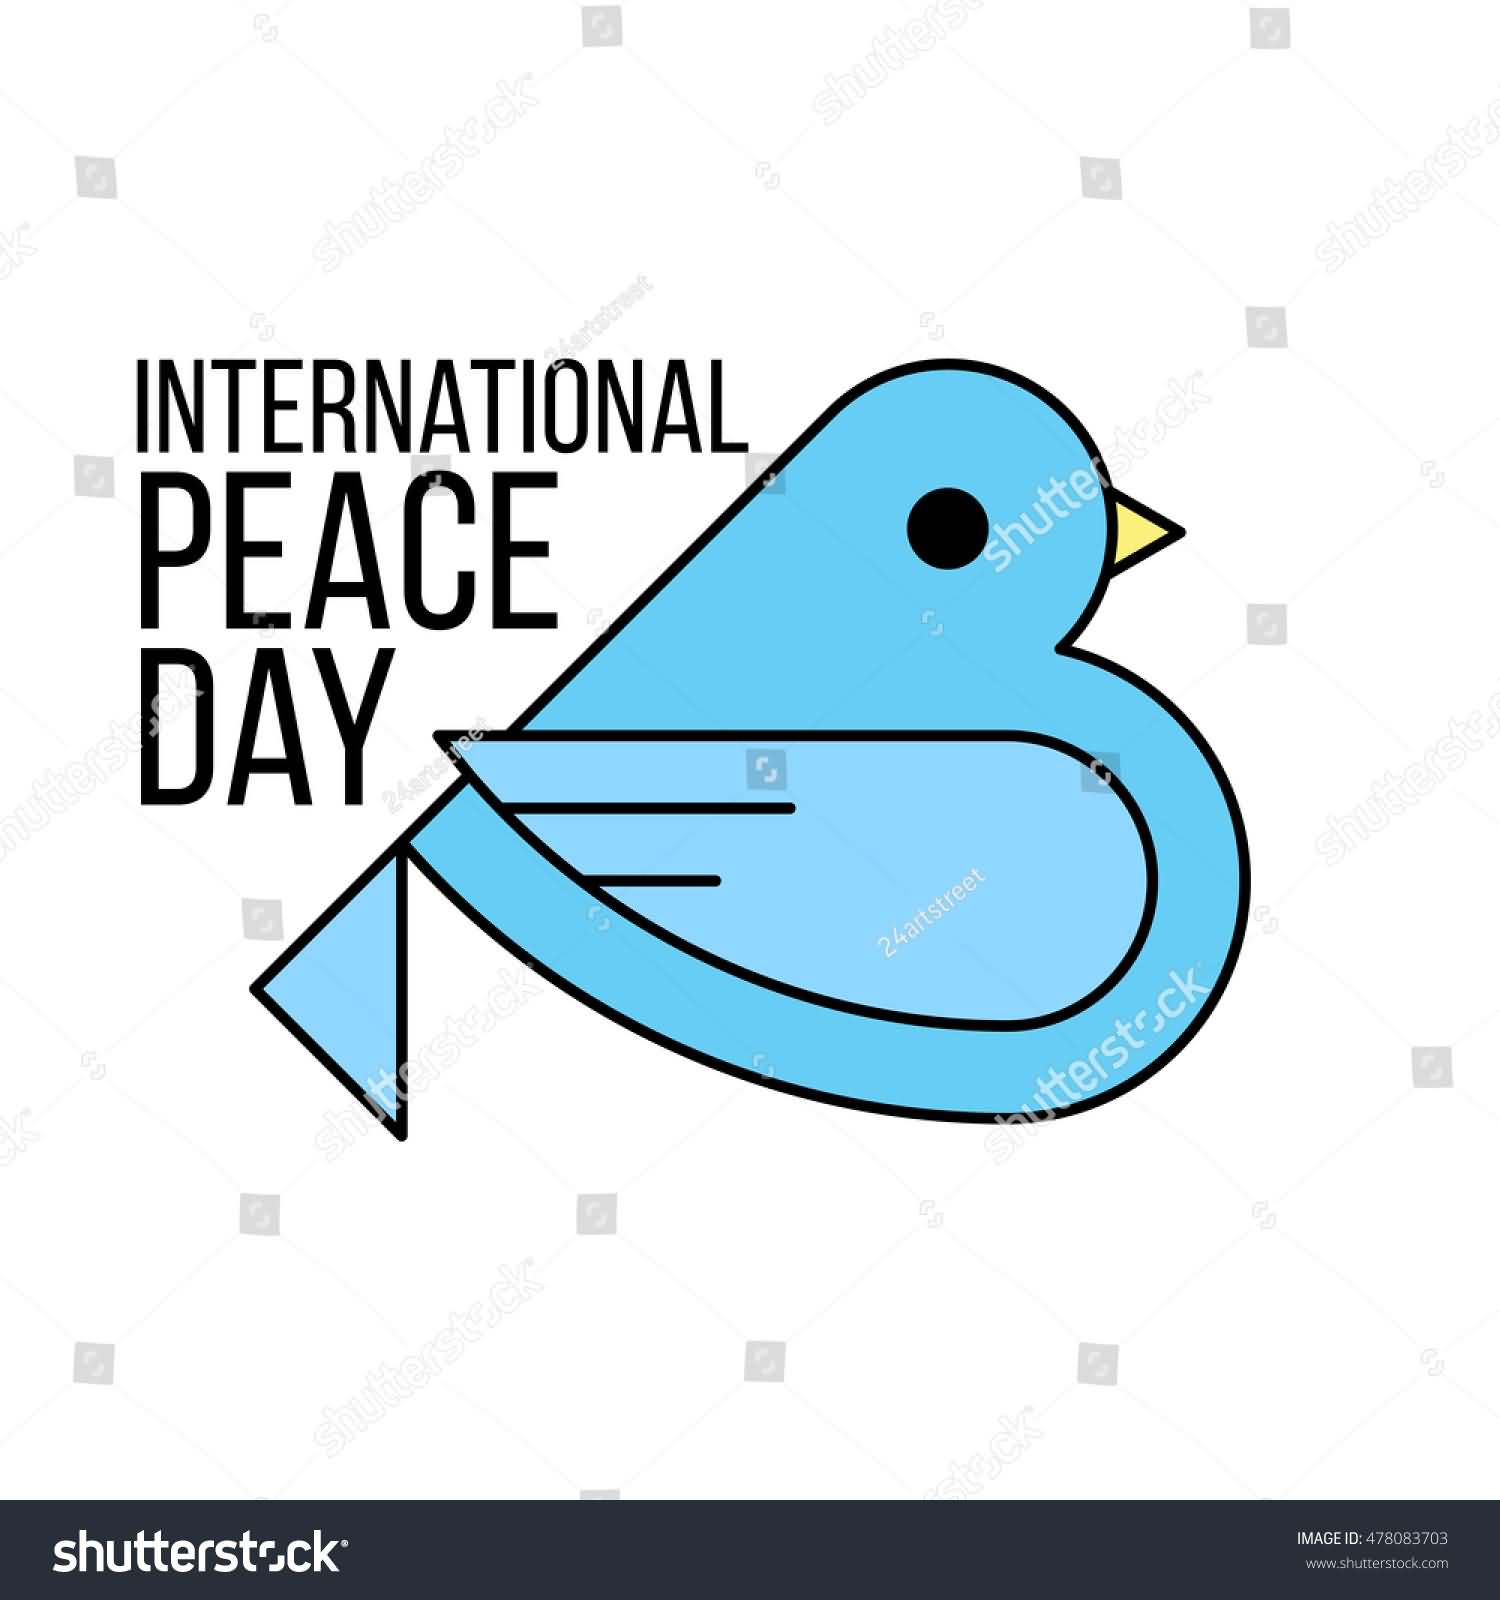 International Peace Day Flying Dove Isolated On White Background Illustration